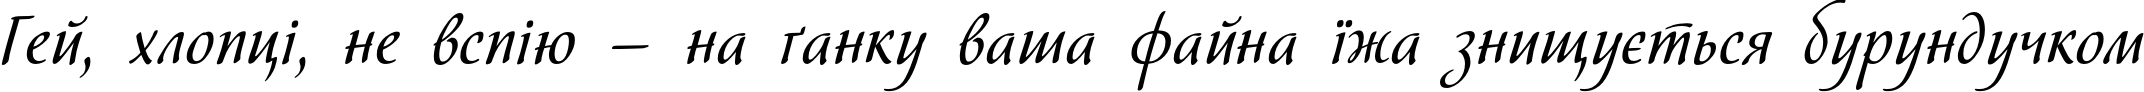 Пример написания шрифтом Hortensia текста на украинском